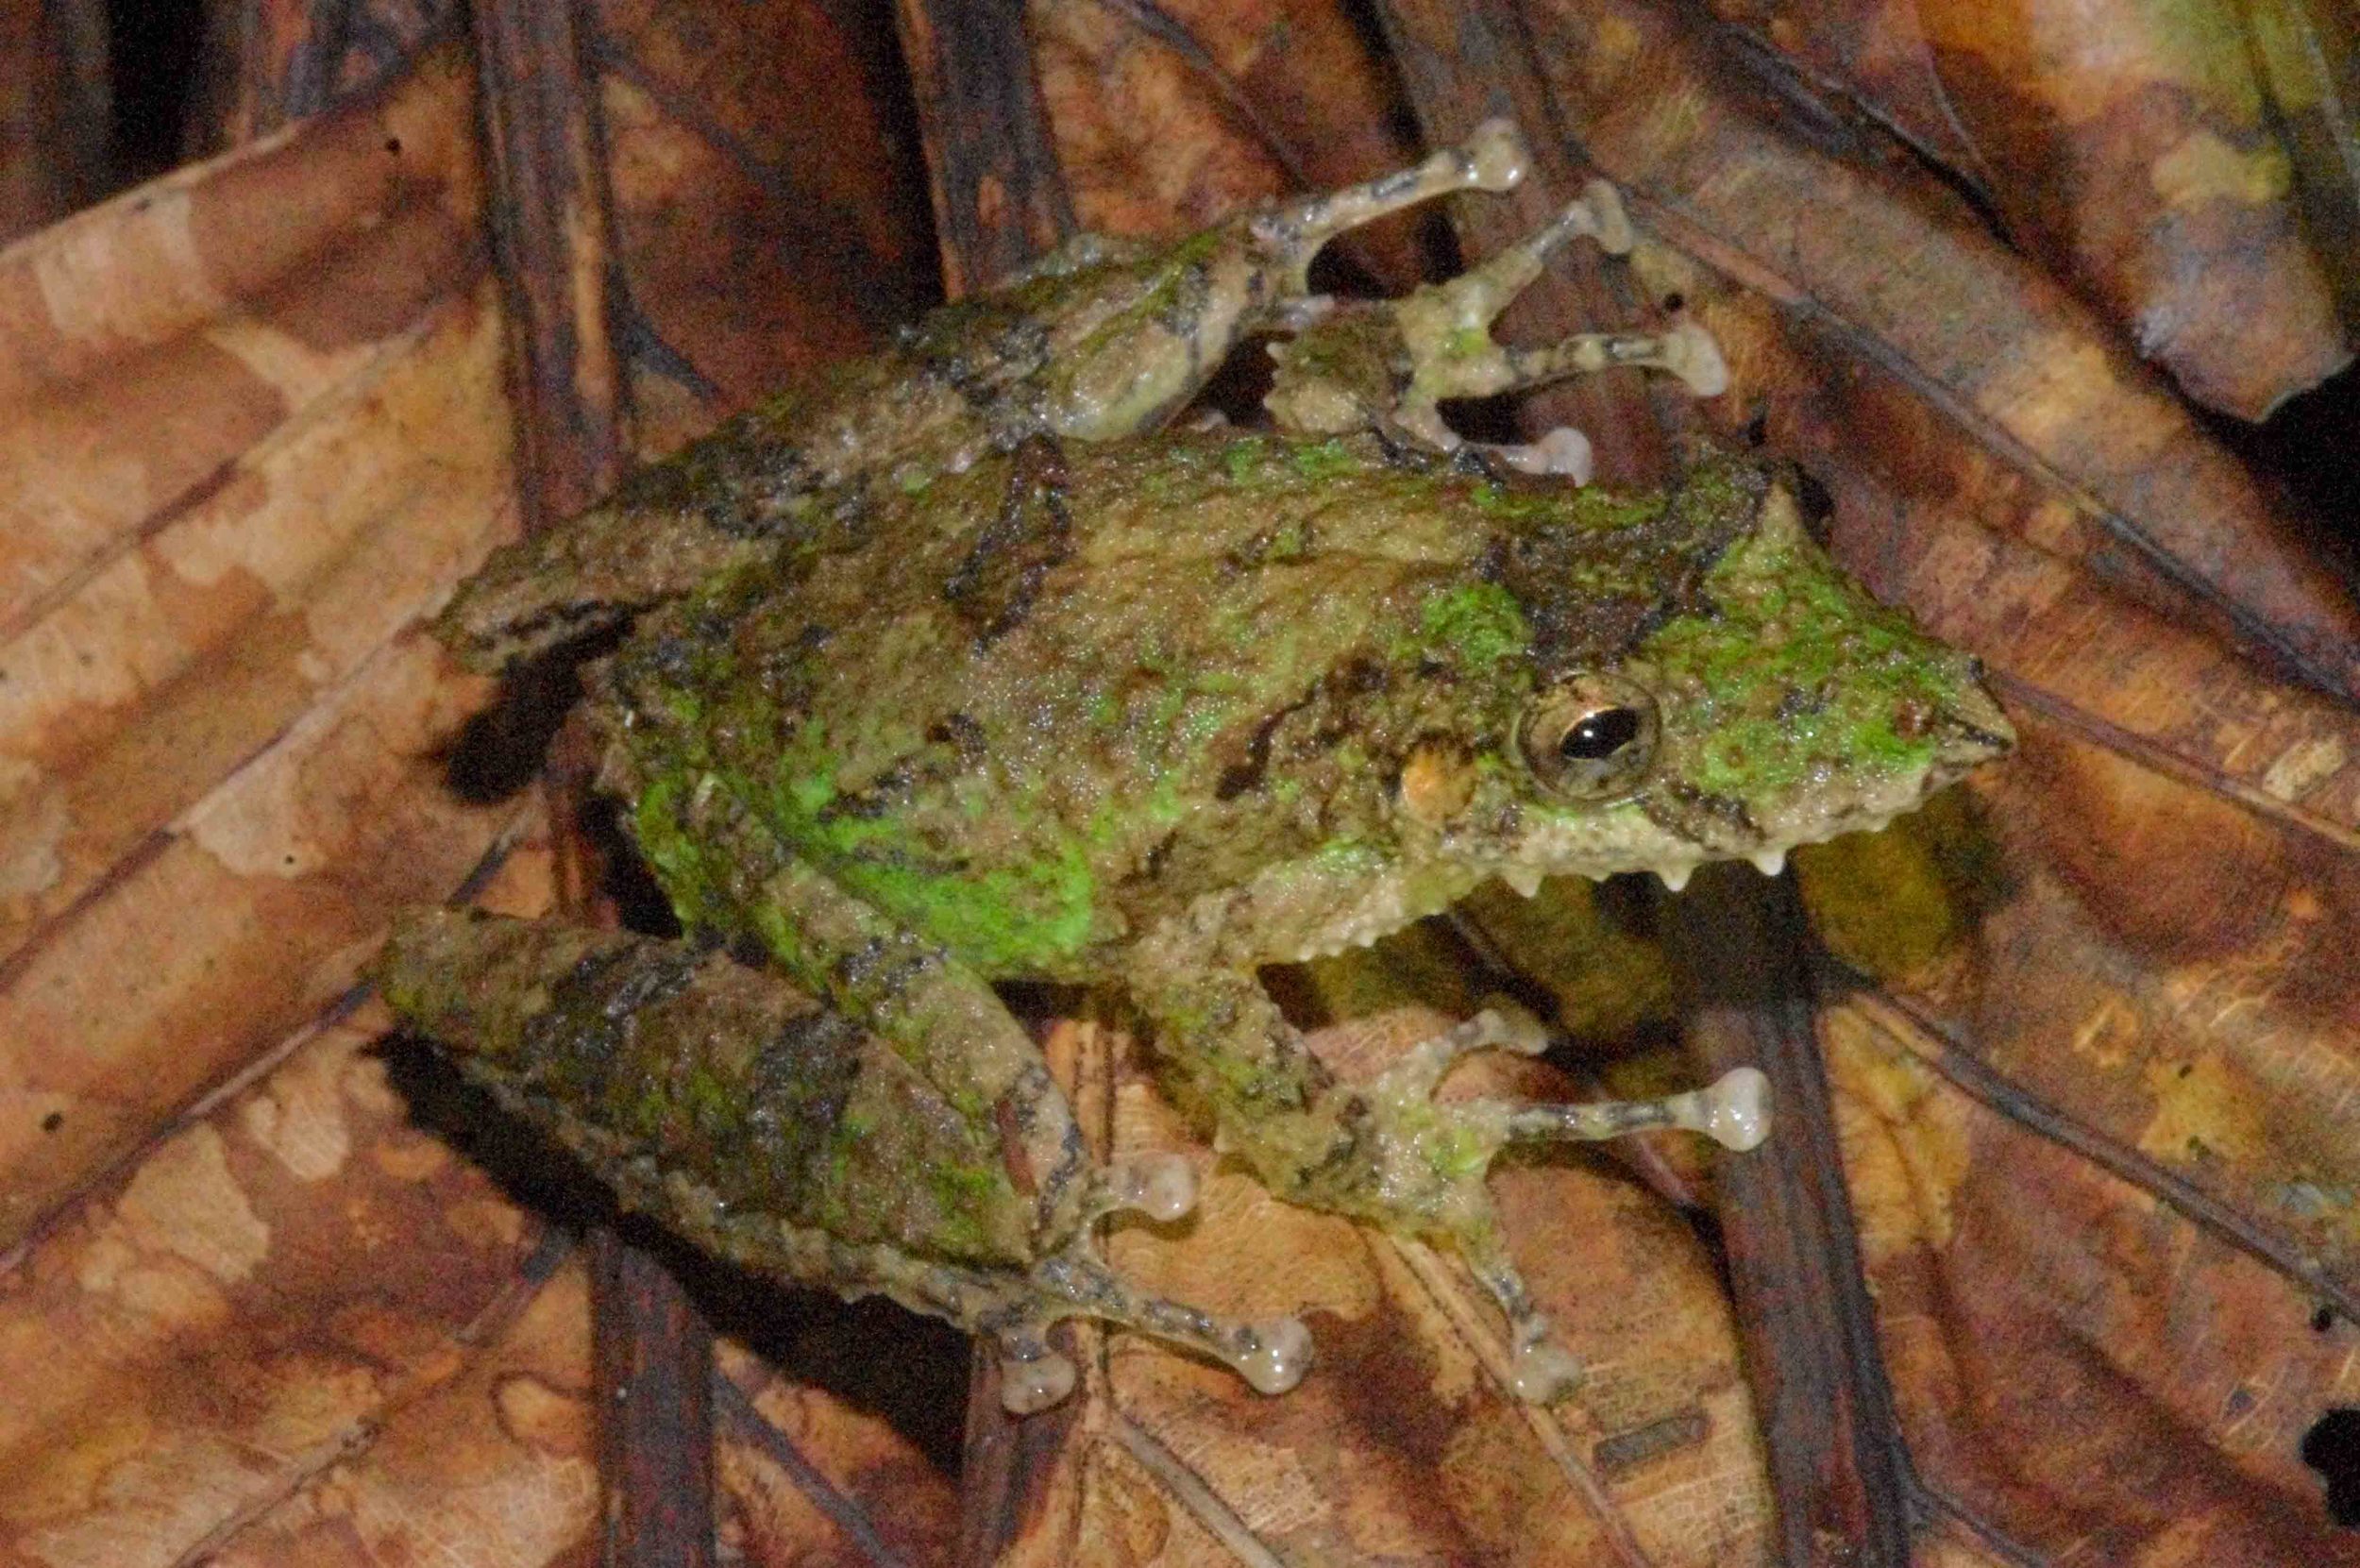 Scinax garbei, Fringe Lipped Treefrog (Photo by Matt Cage)